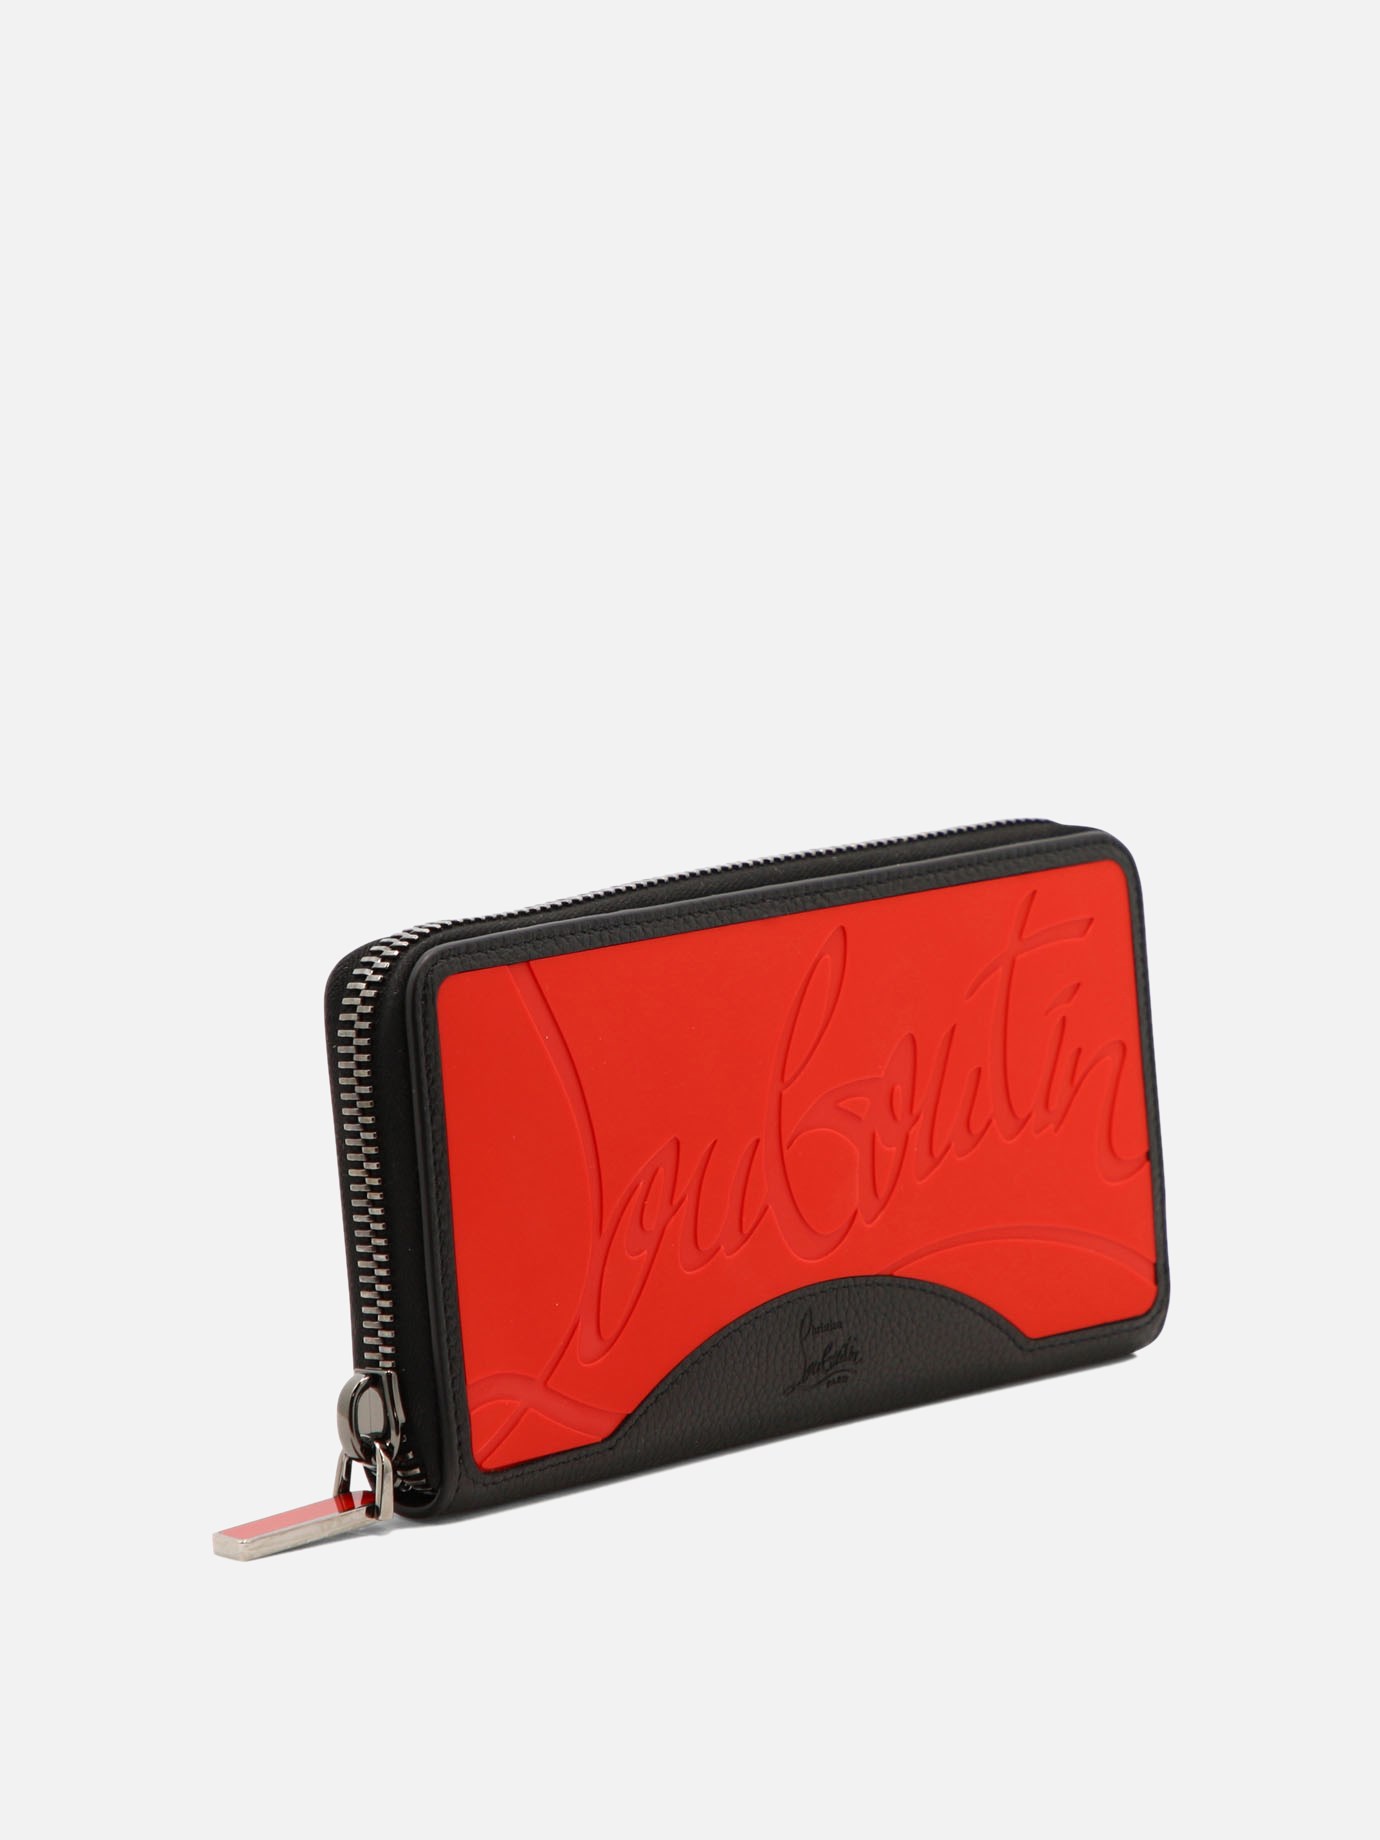  Panettone  wallet by Christian Louboutin